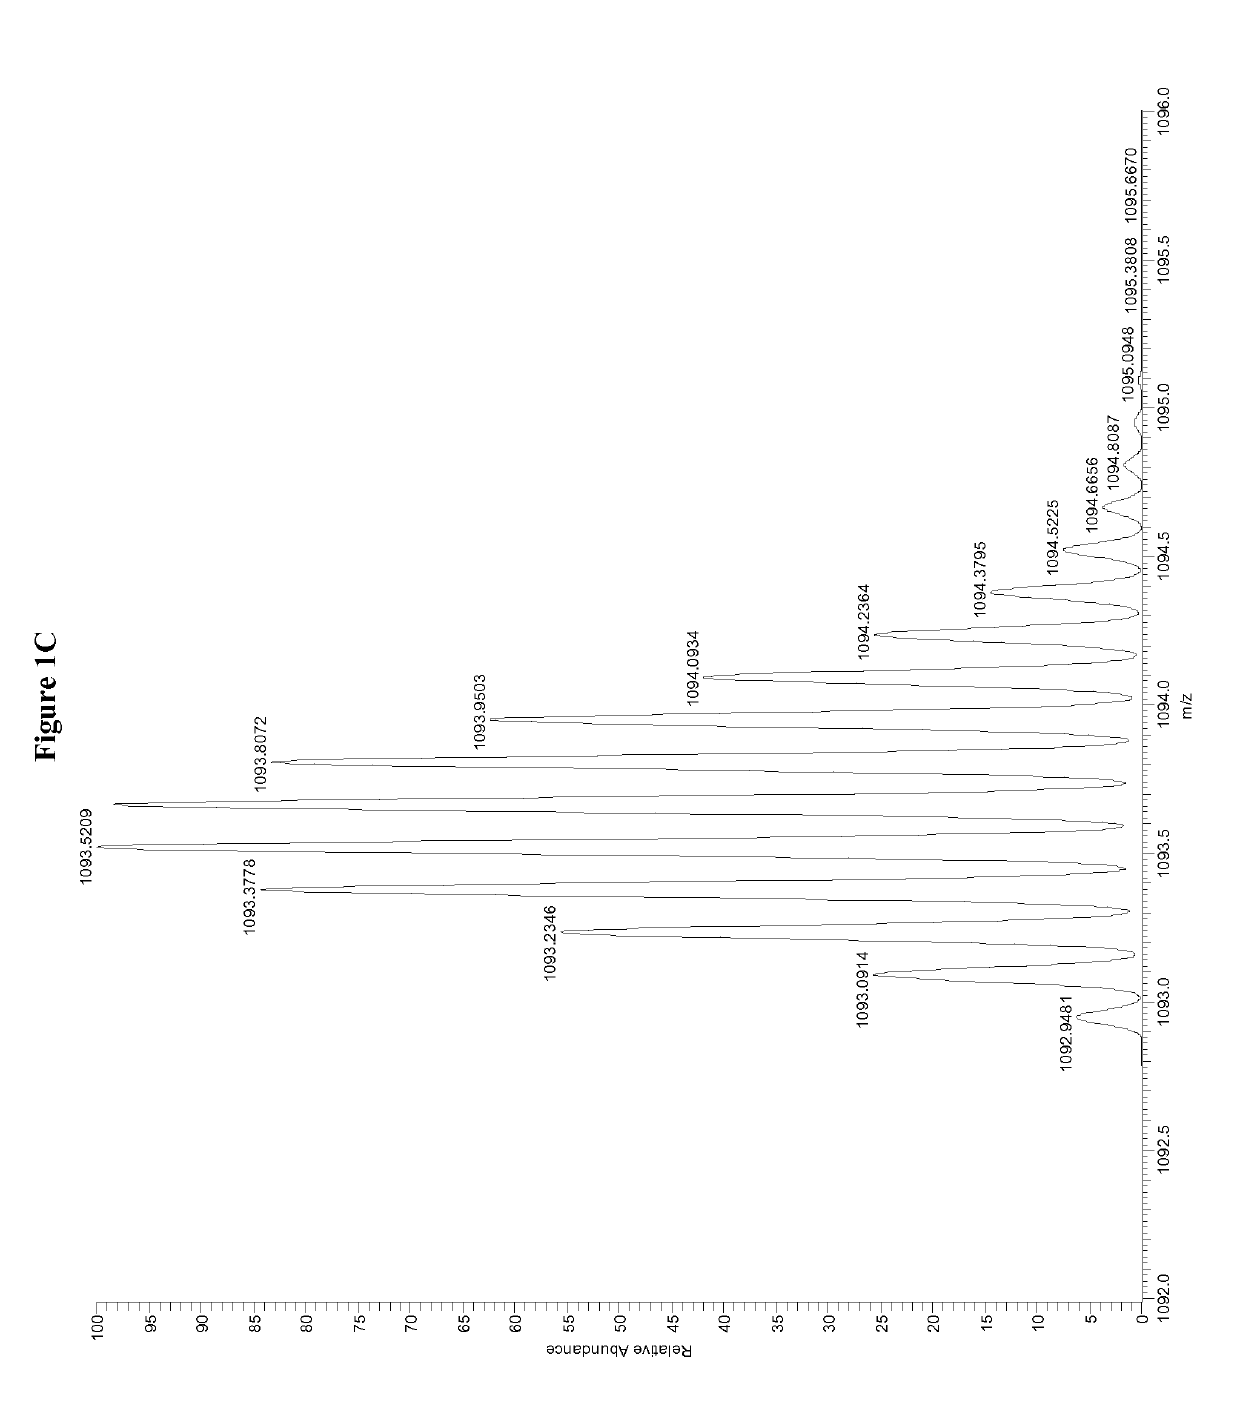 Quantitation of insulin by tandem mass spectrometry of insulin B chain